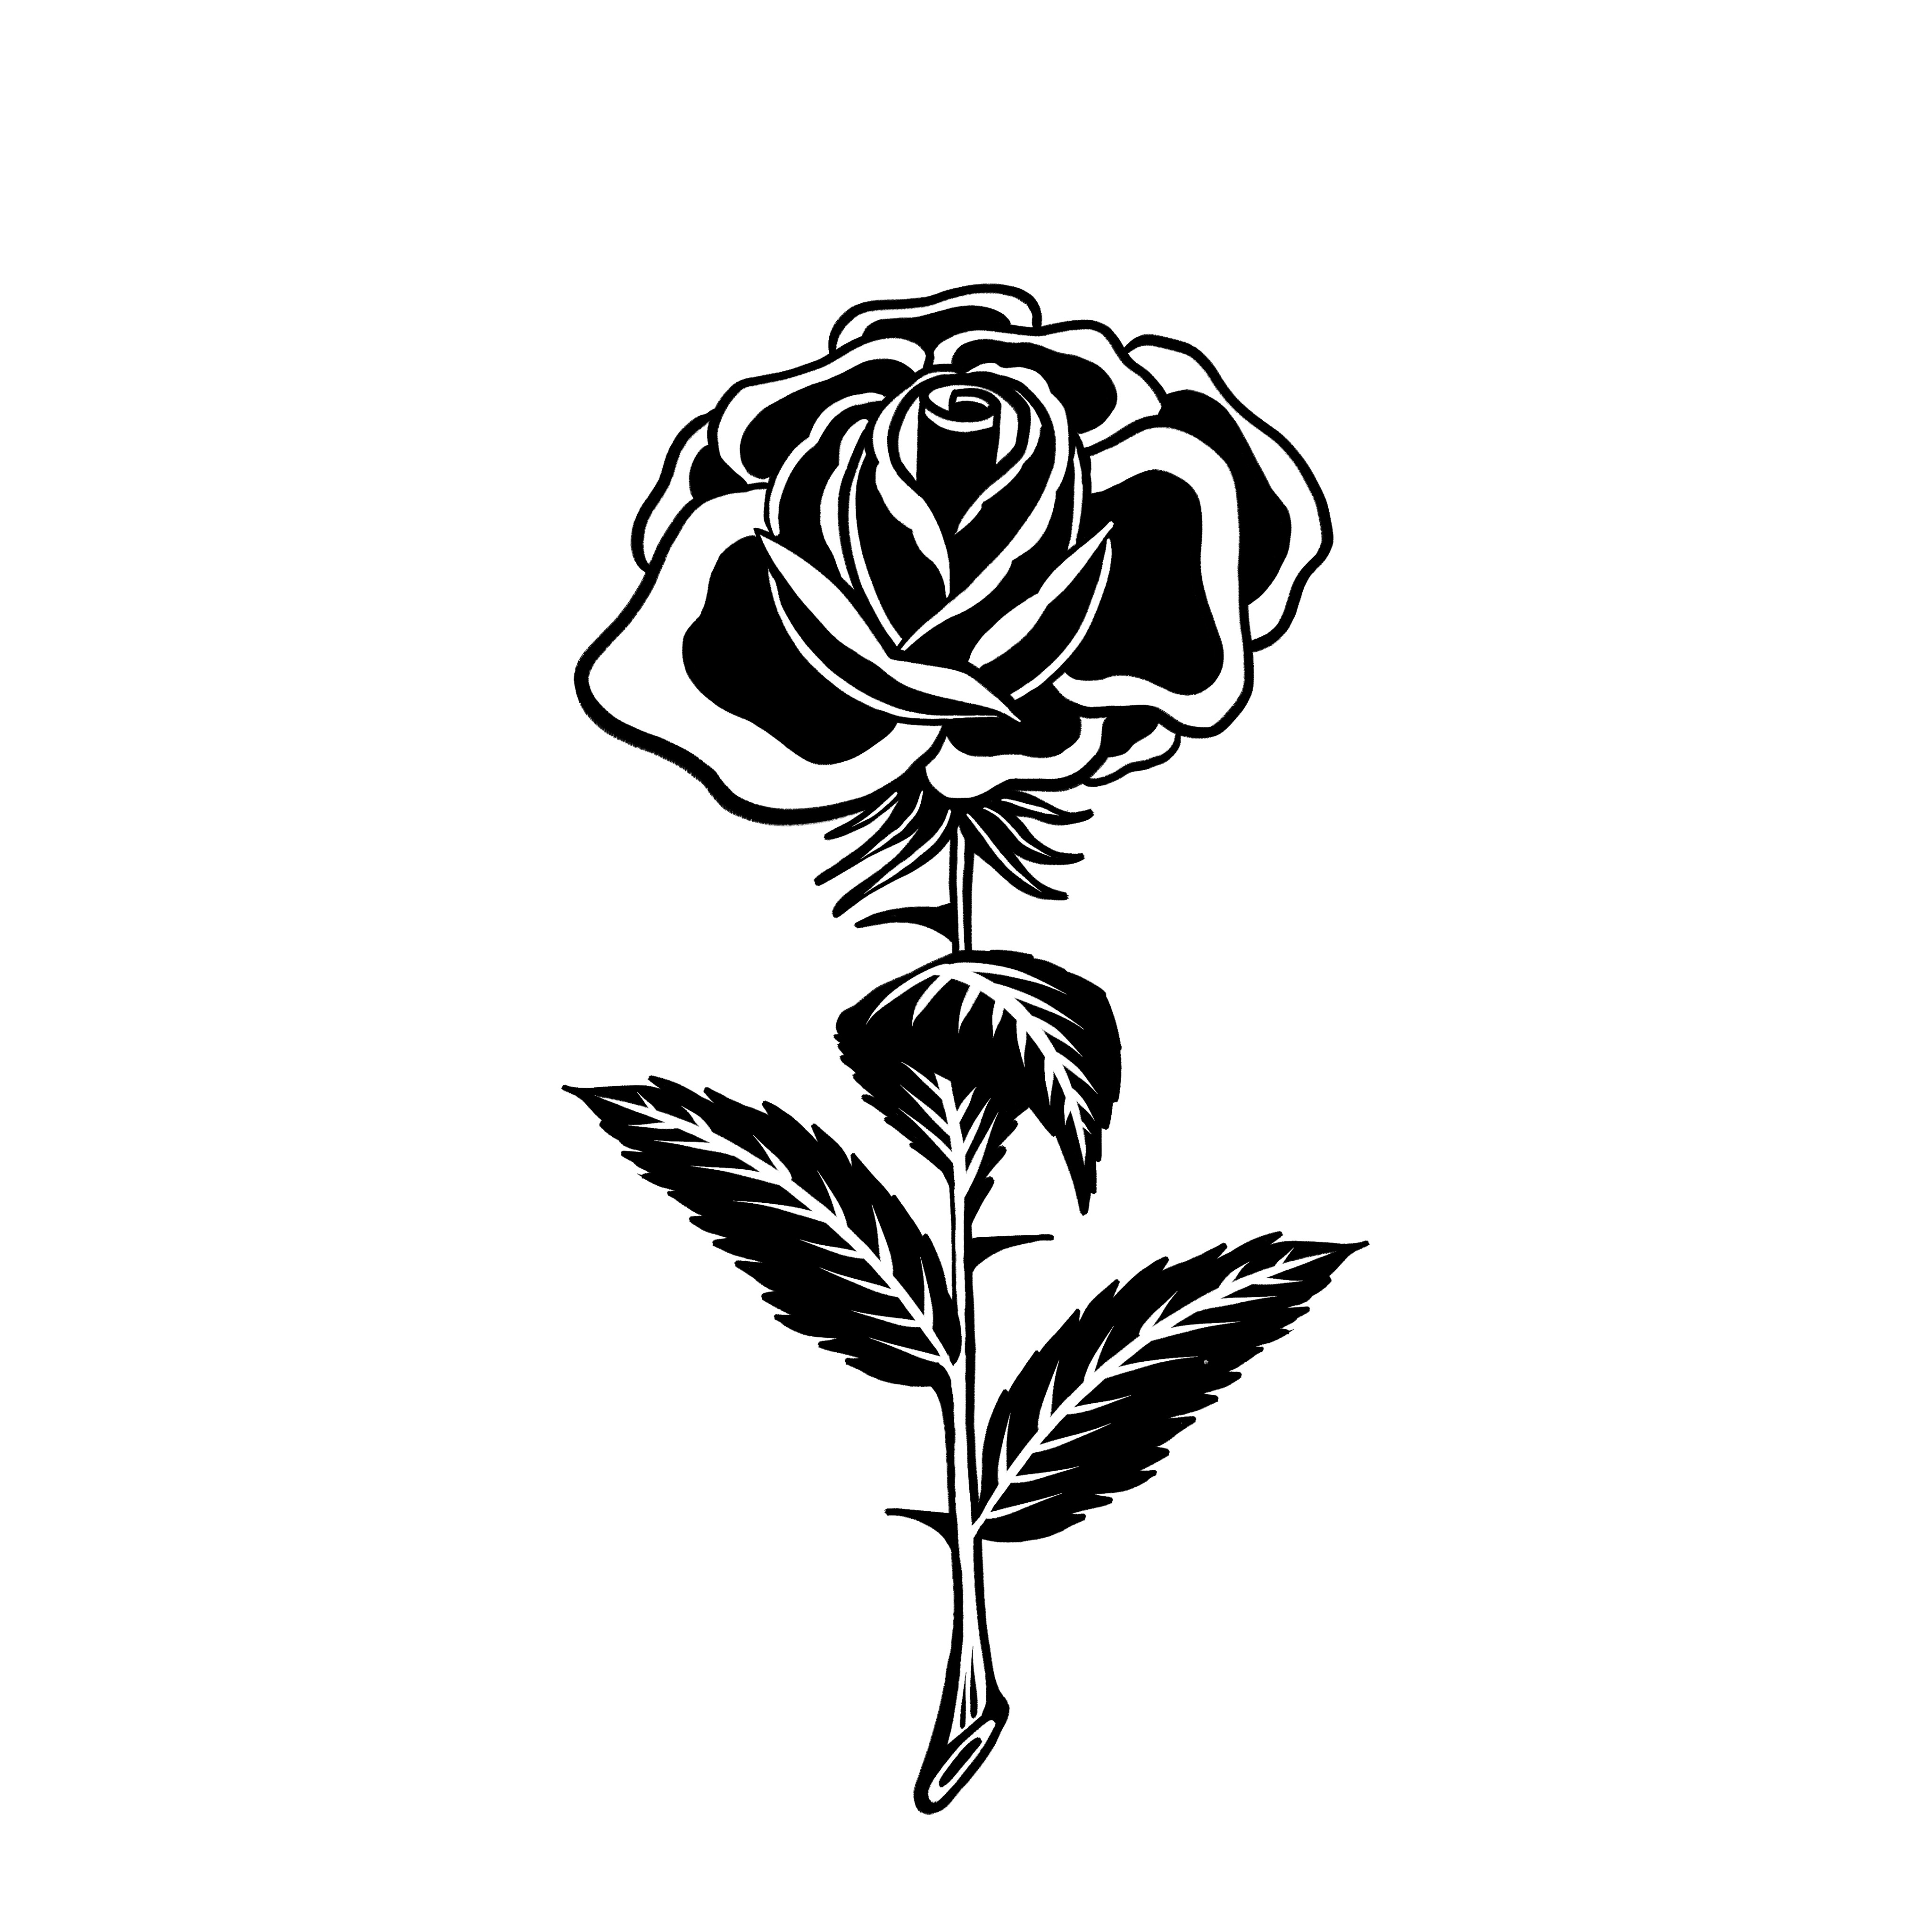 Blackwork Roses Embroidery Design | EmbroideryDesigns.com